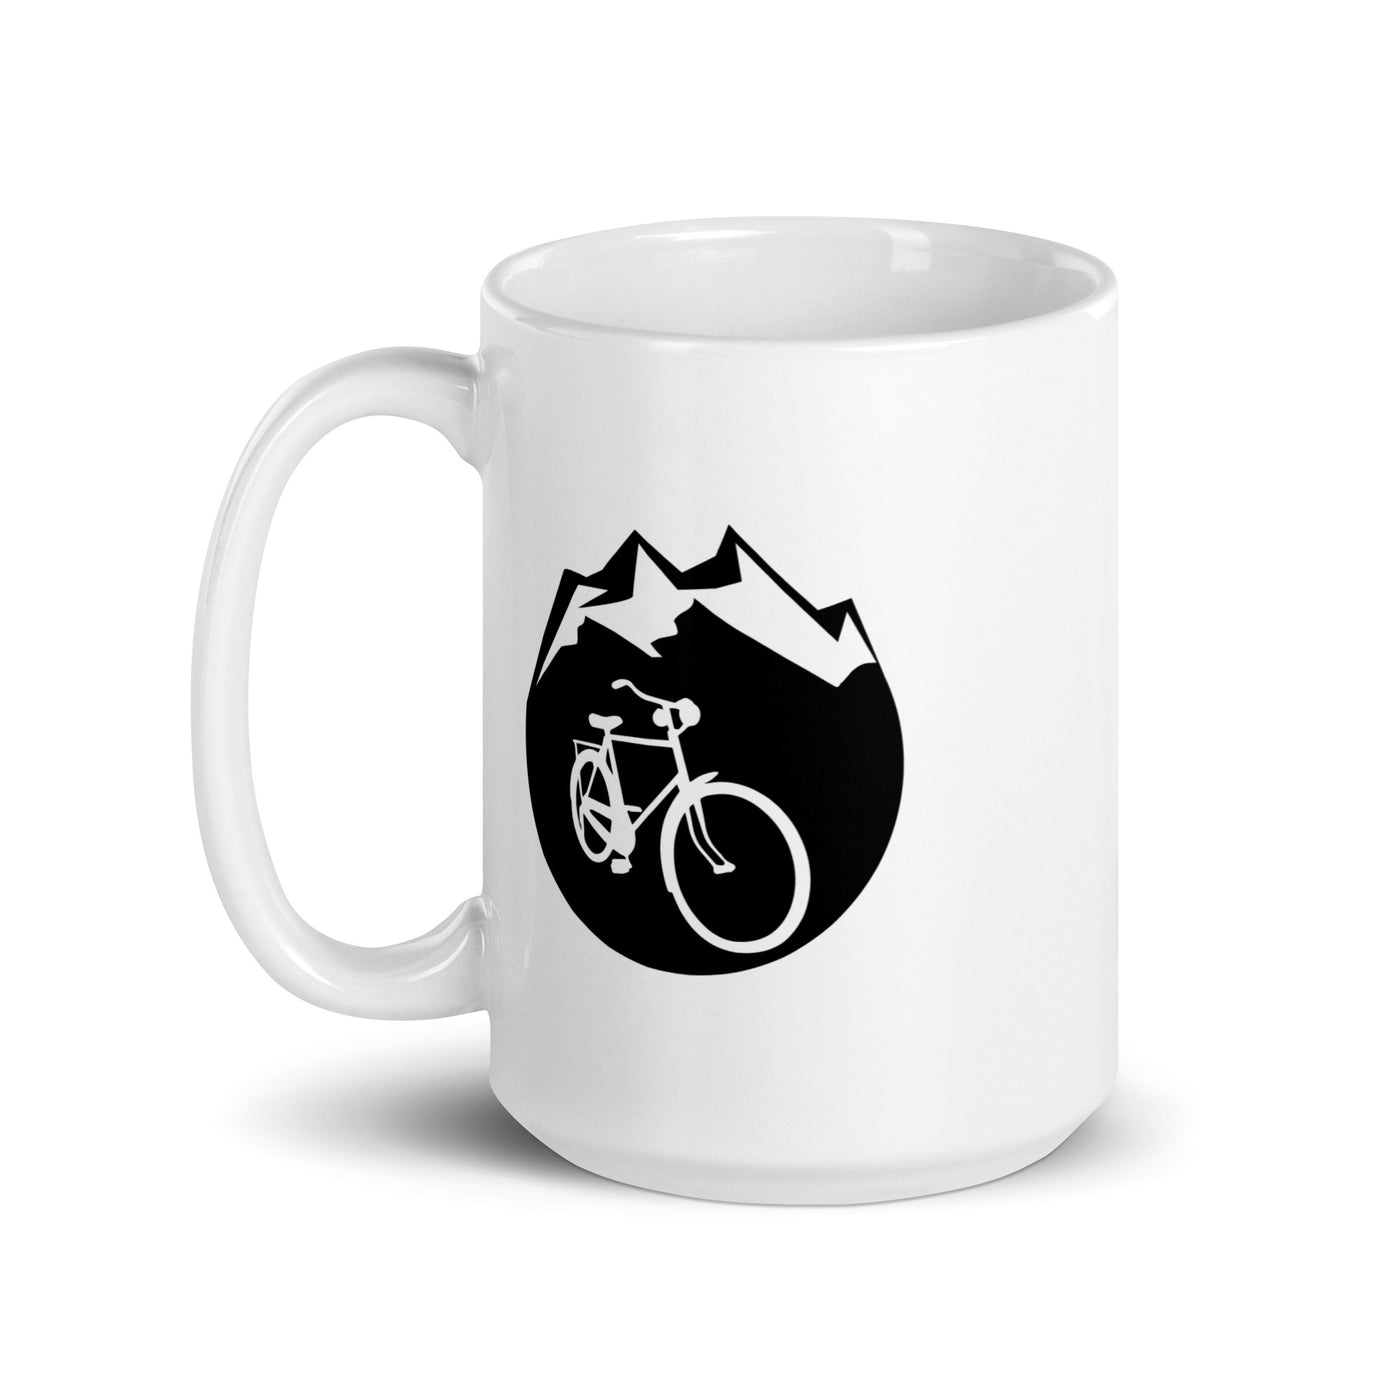 Circle - Mountain - Cycling - Tasse fahrrad